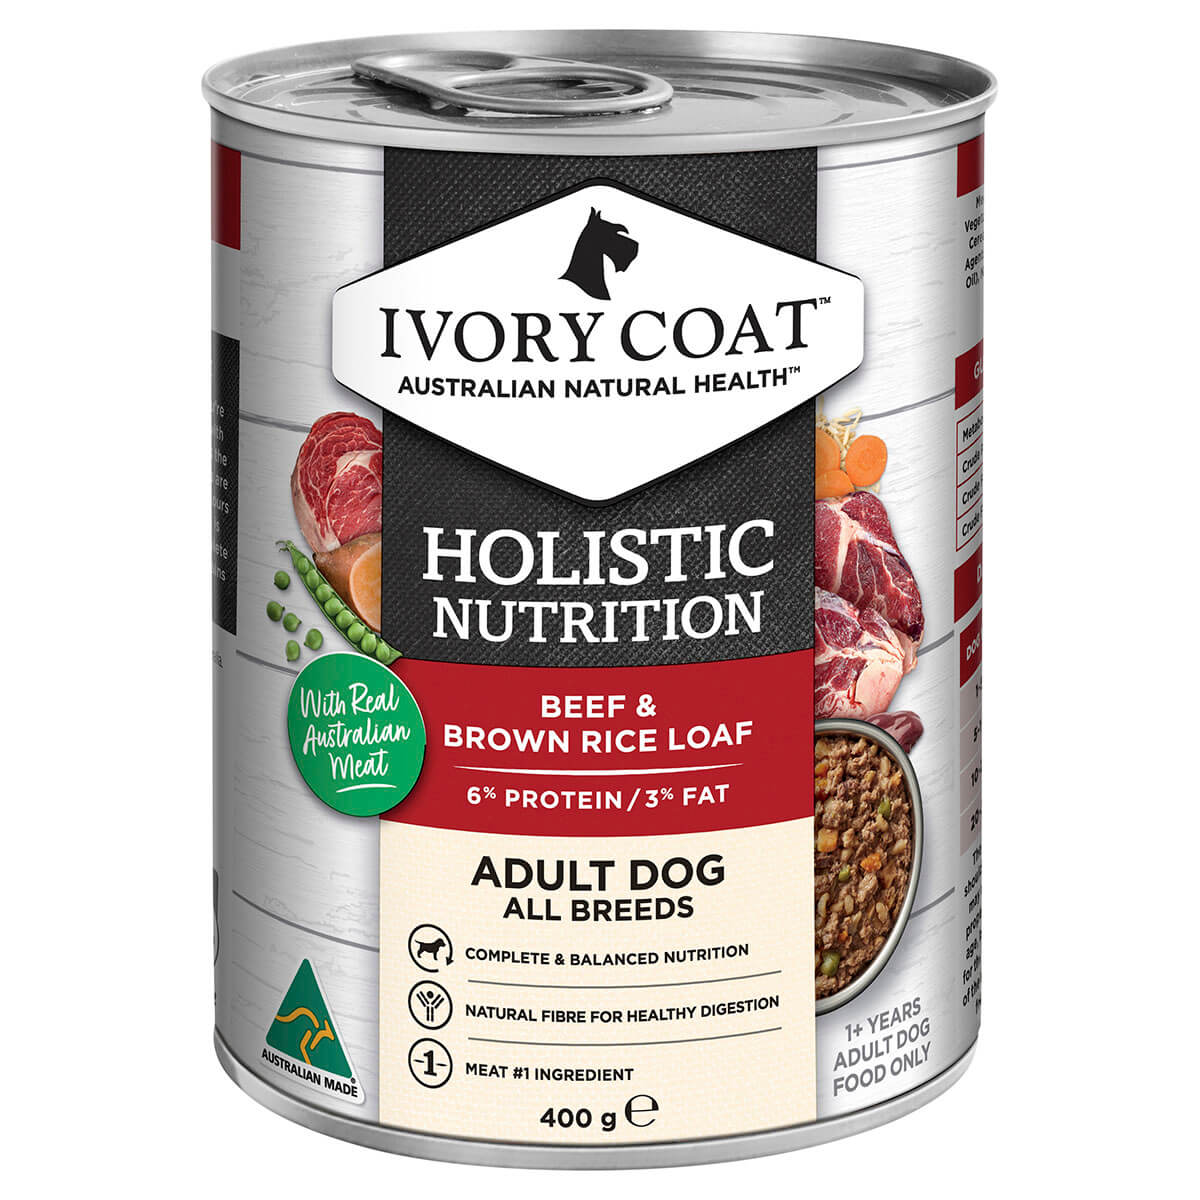 Ivory Coat Holistic Nutrition Adult Wet Dog Food Beef & Brown Rice Loaf 400g